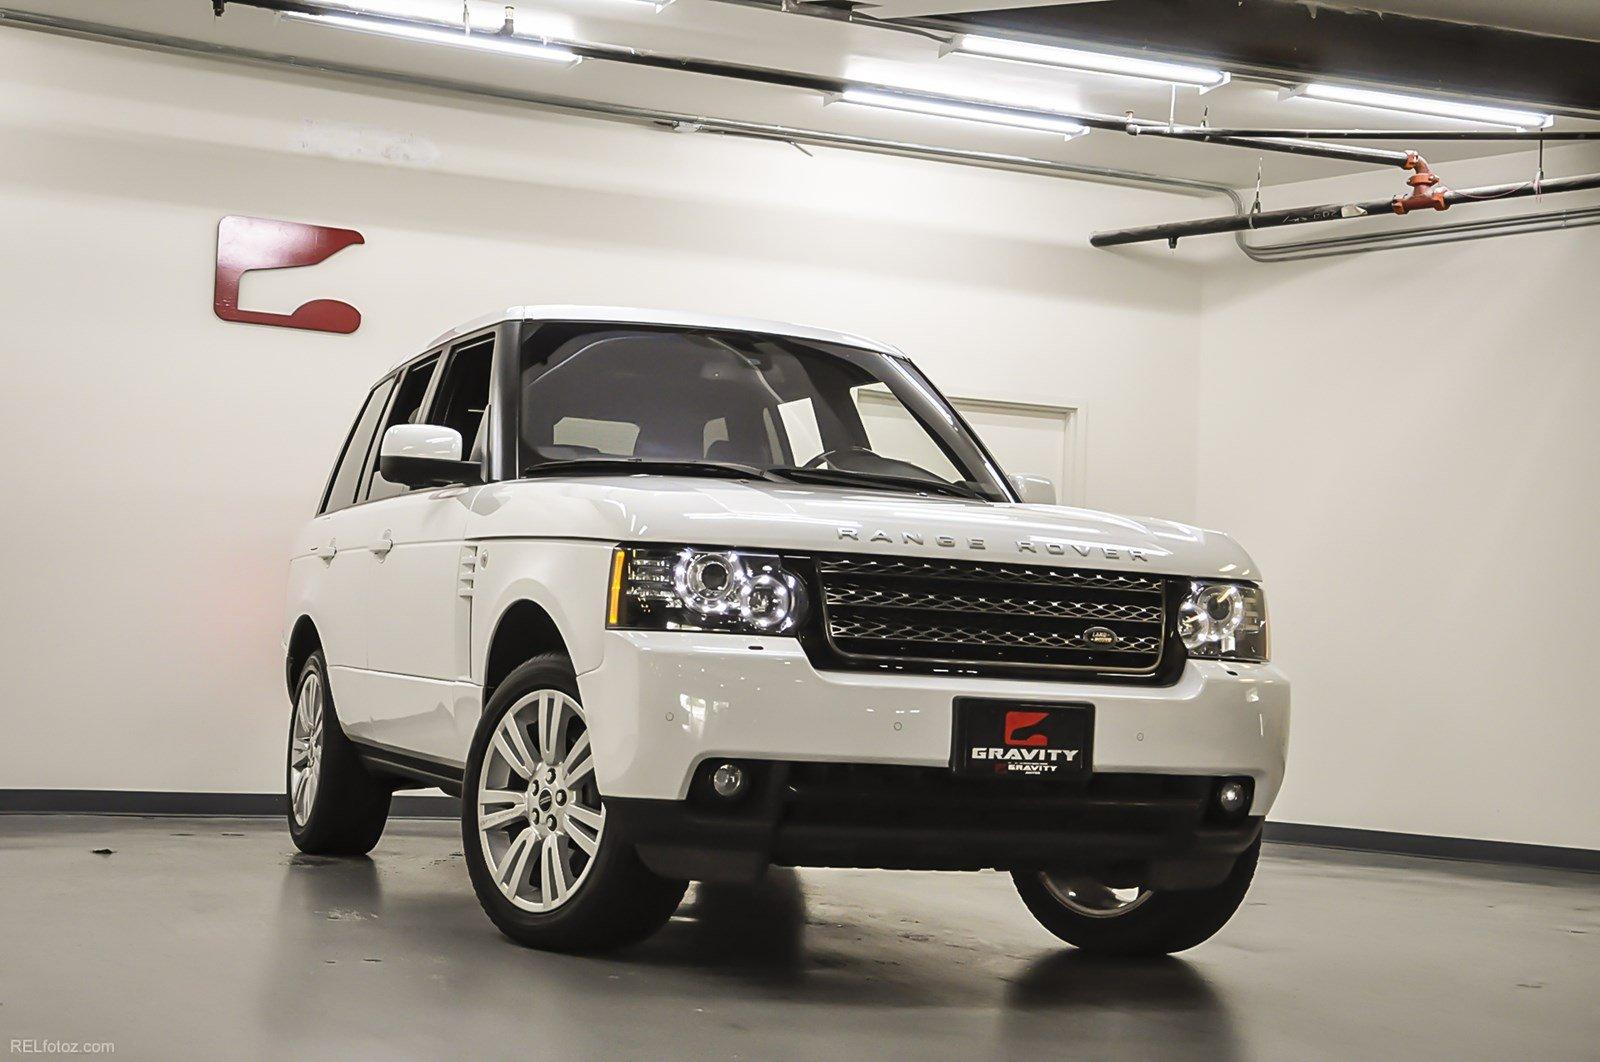 Used 2012 Land Rover Range Rover HSE LUX for sale Sold at Gravity Autos Marietta in Marietta GA 30060 2